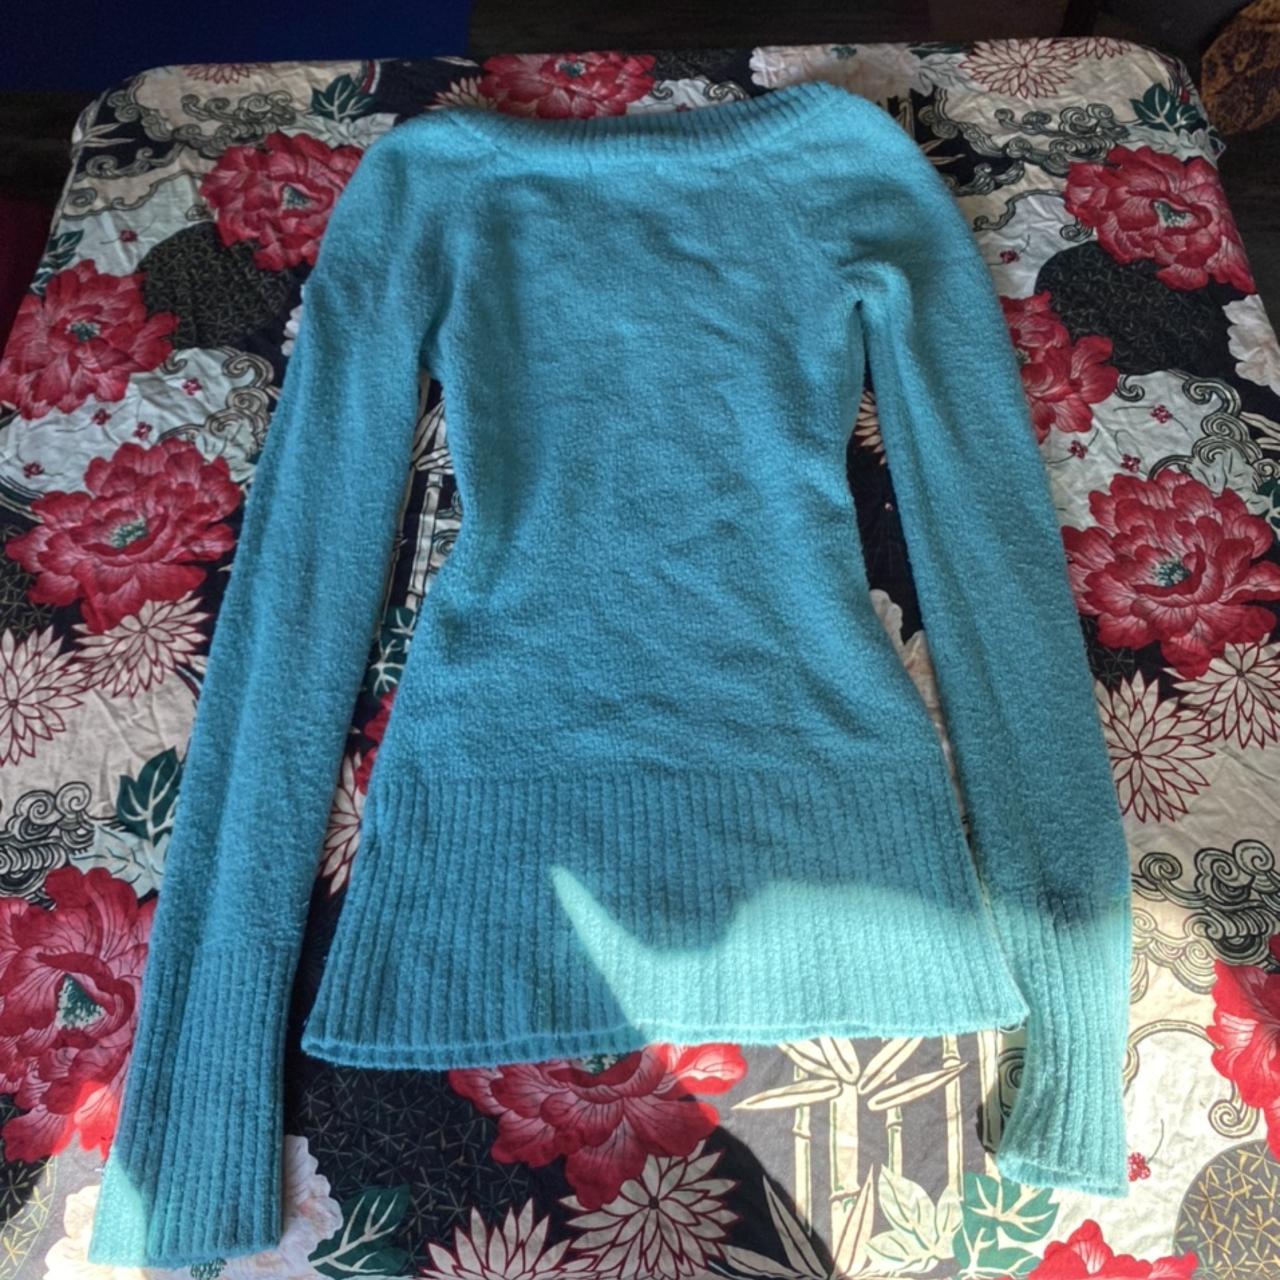 Product Image 2 - Fuzzy blue v neck sweater